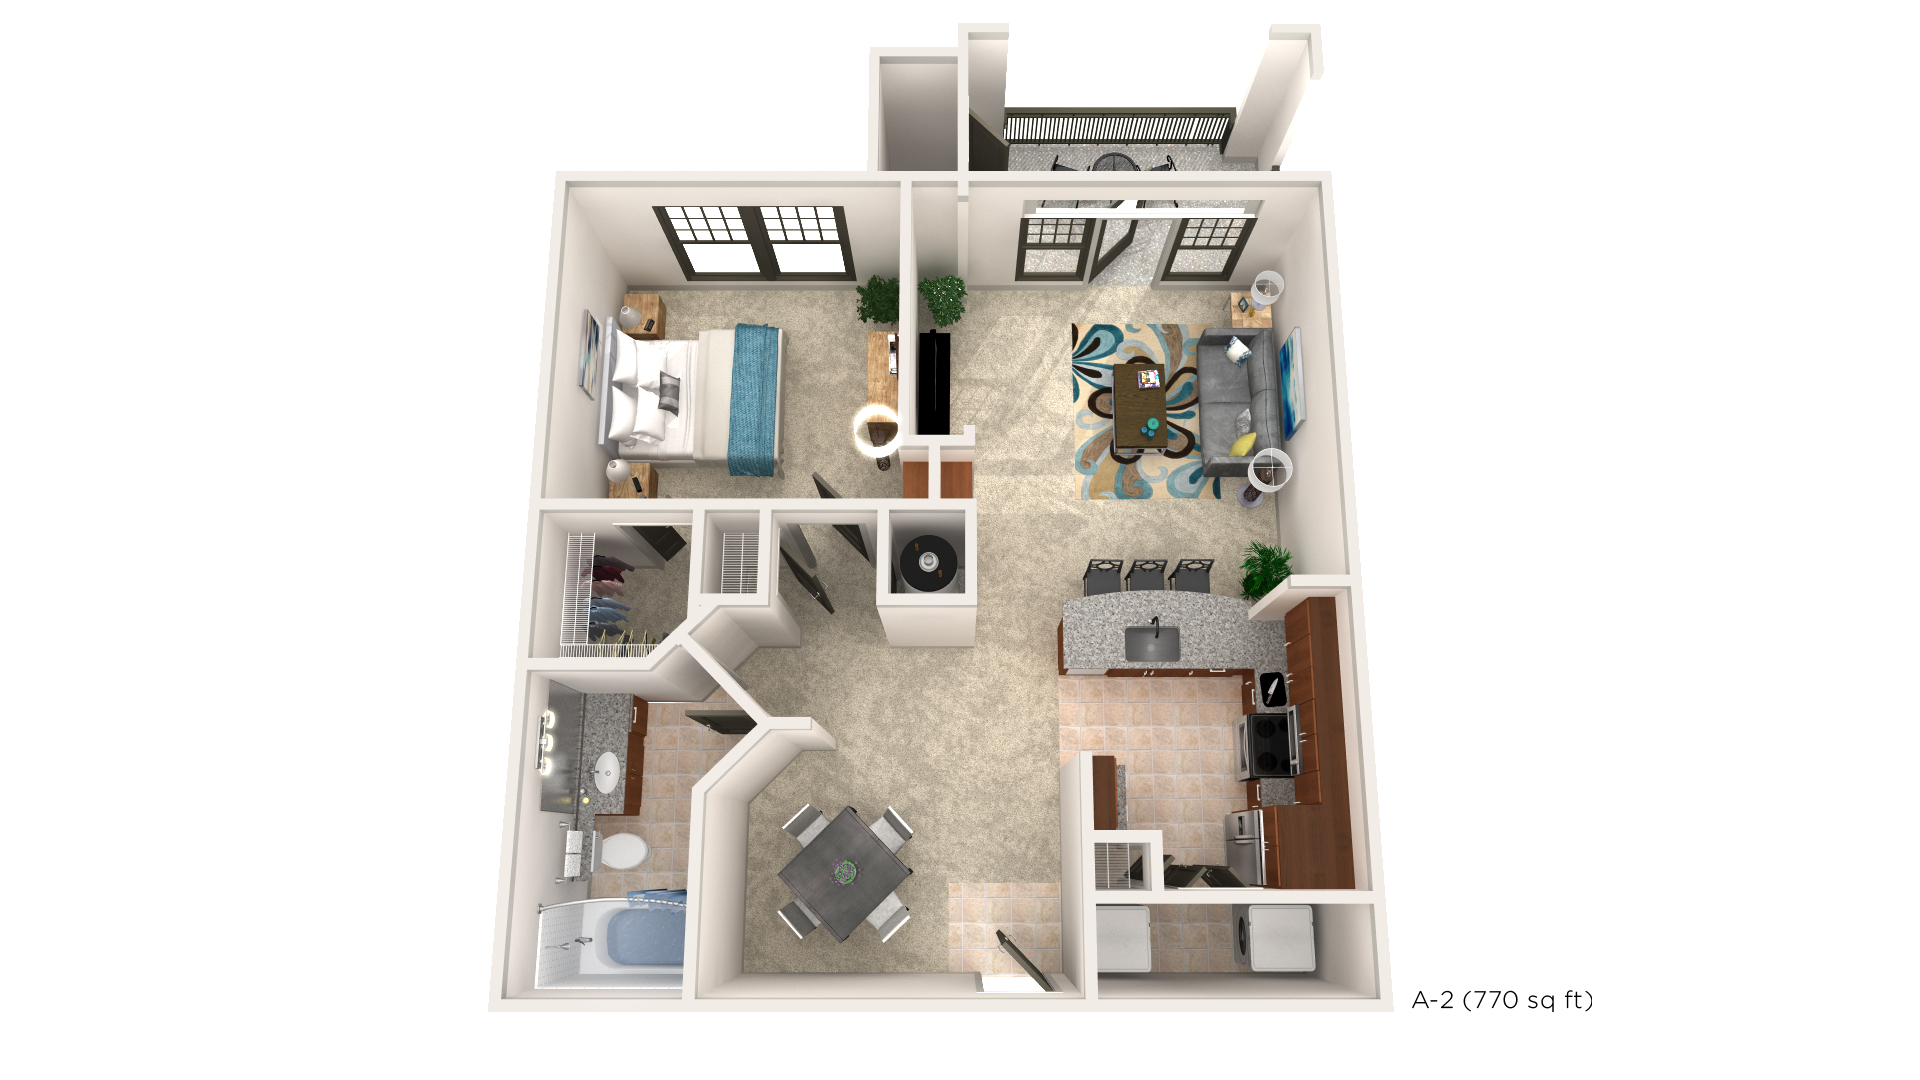 Brookleigh Flats Luxury Apartment Homes - Floorplan - A-2